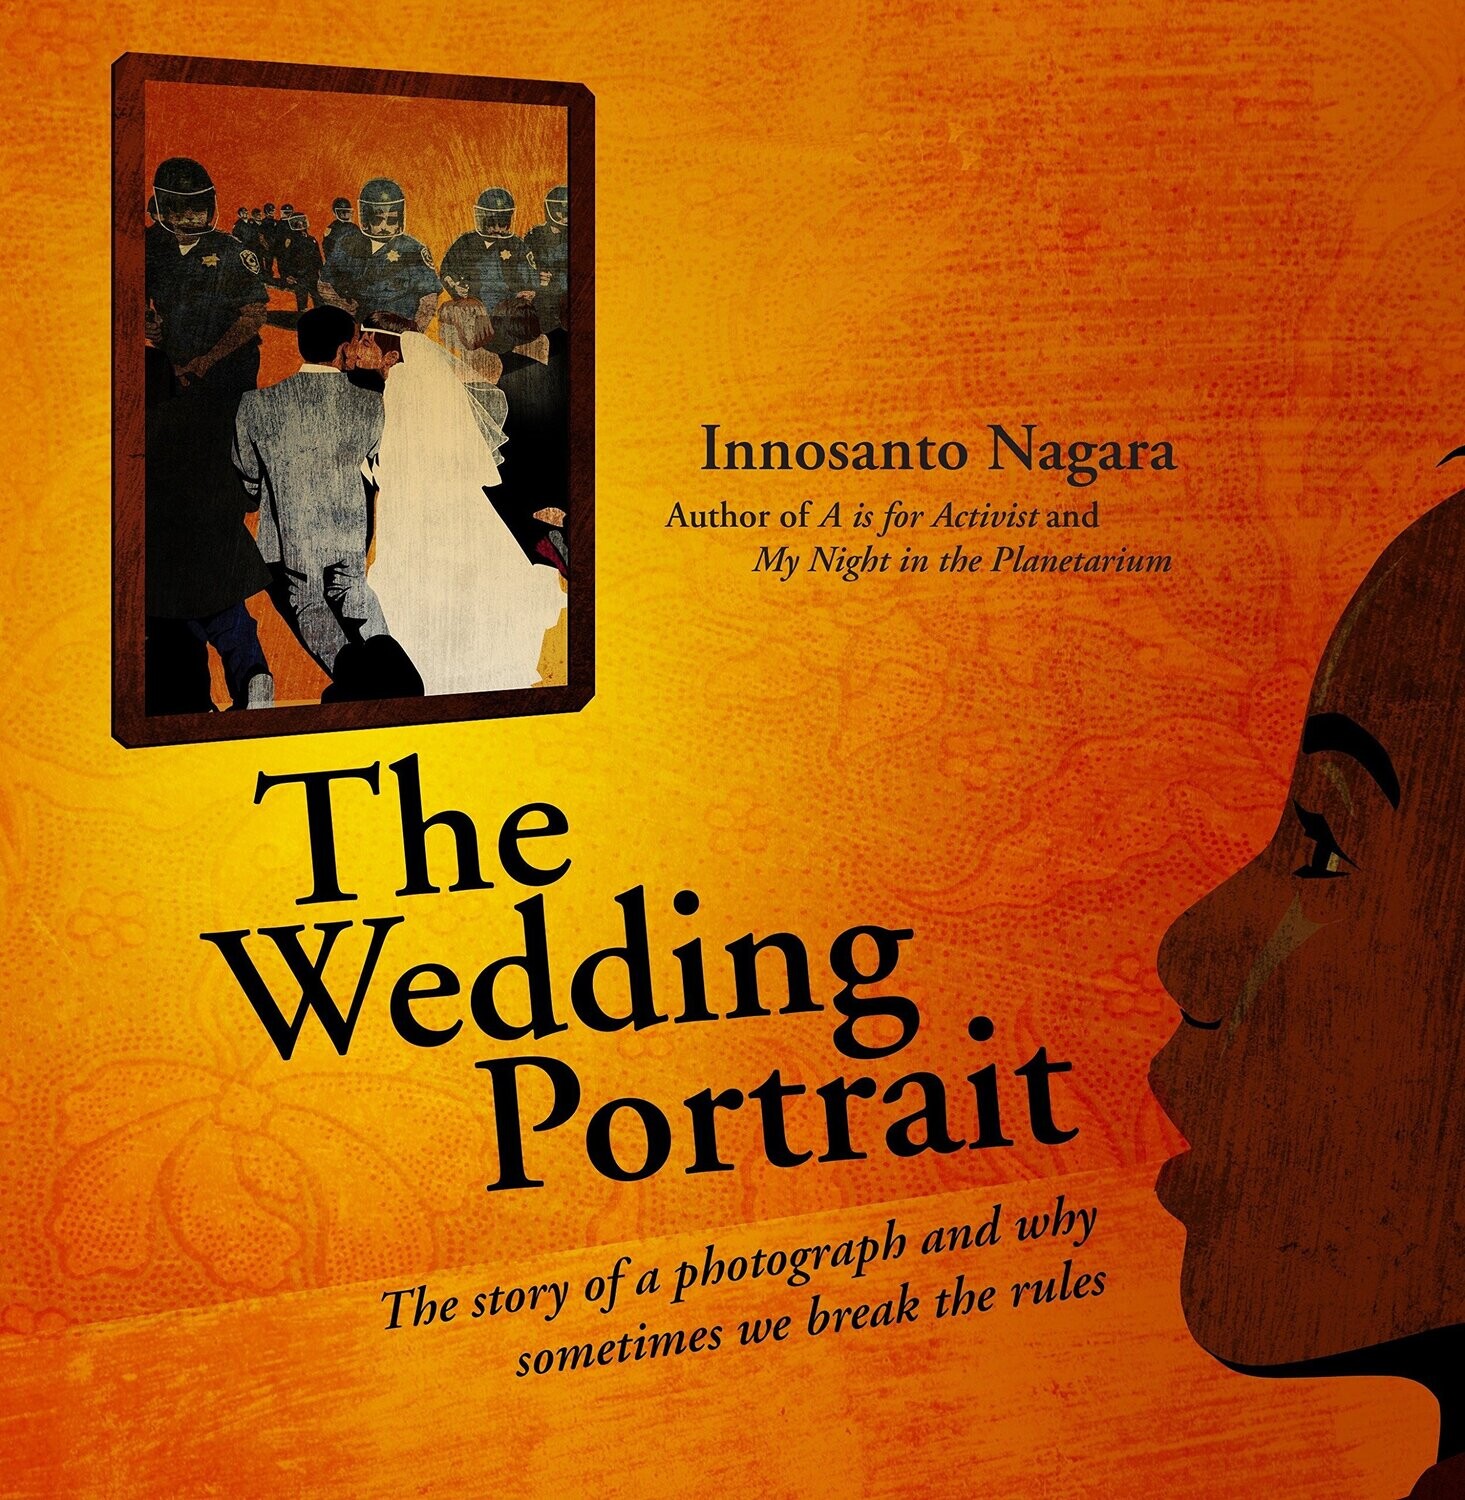 The Wedding Portrait by Insanto Nagara